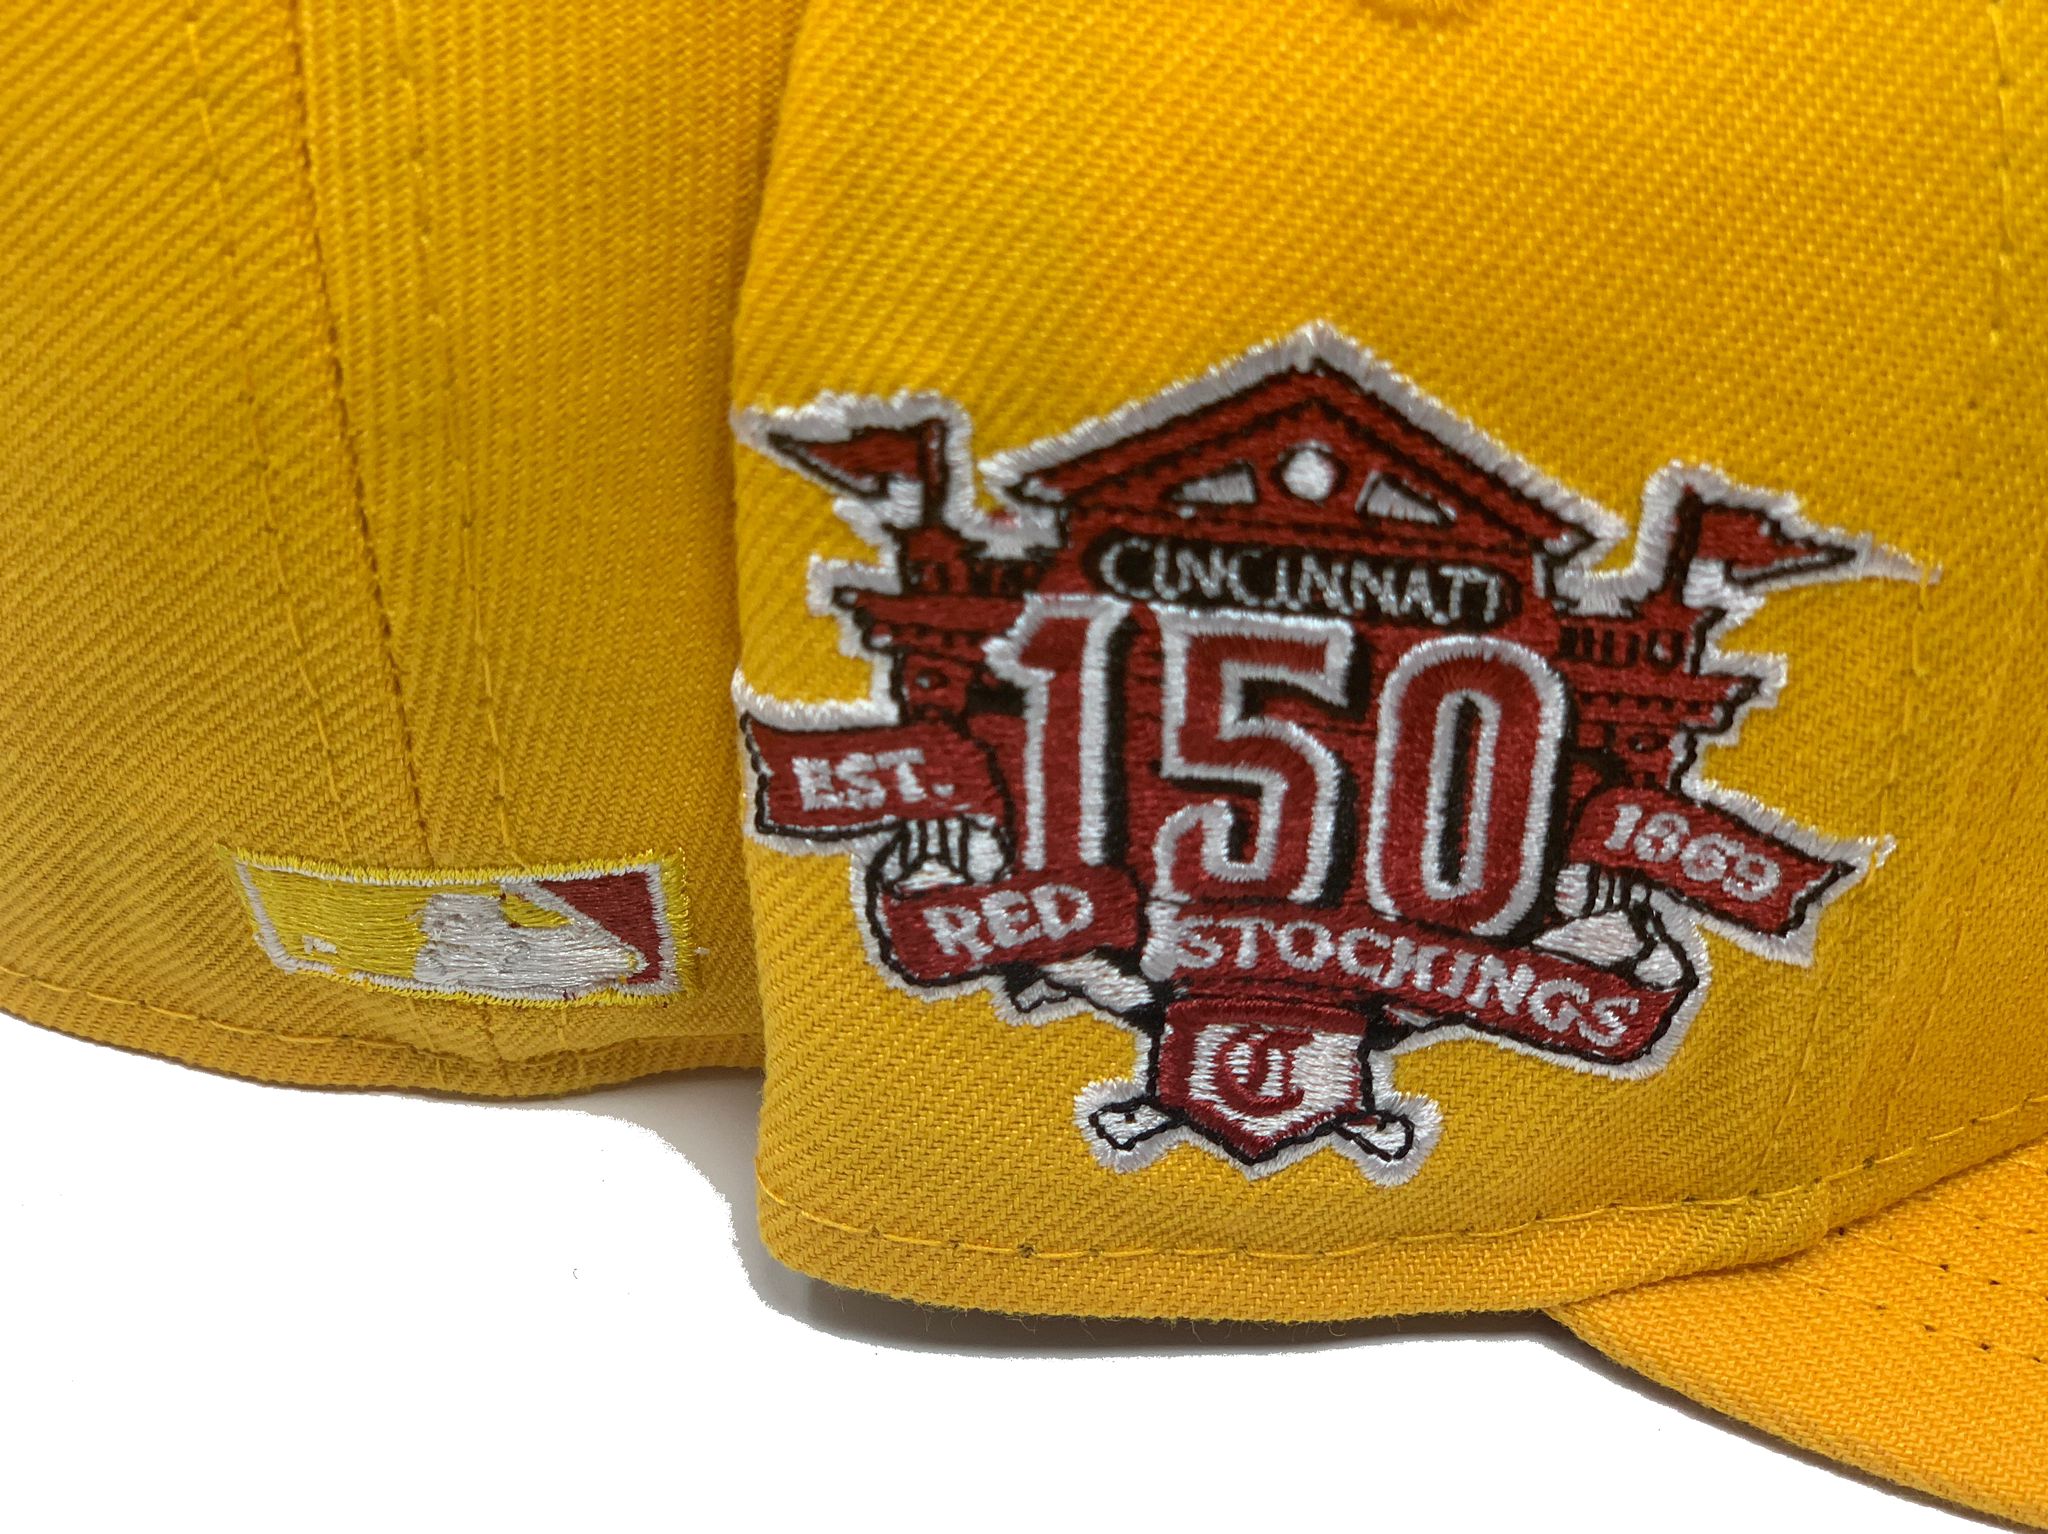 New Era Cincinnati Reds Capsule Nights of Terror 150th Anniversary